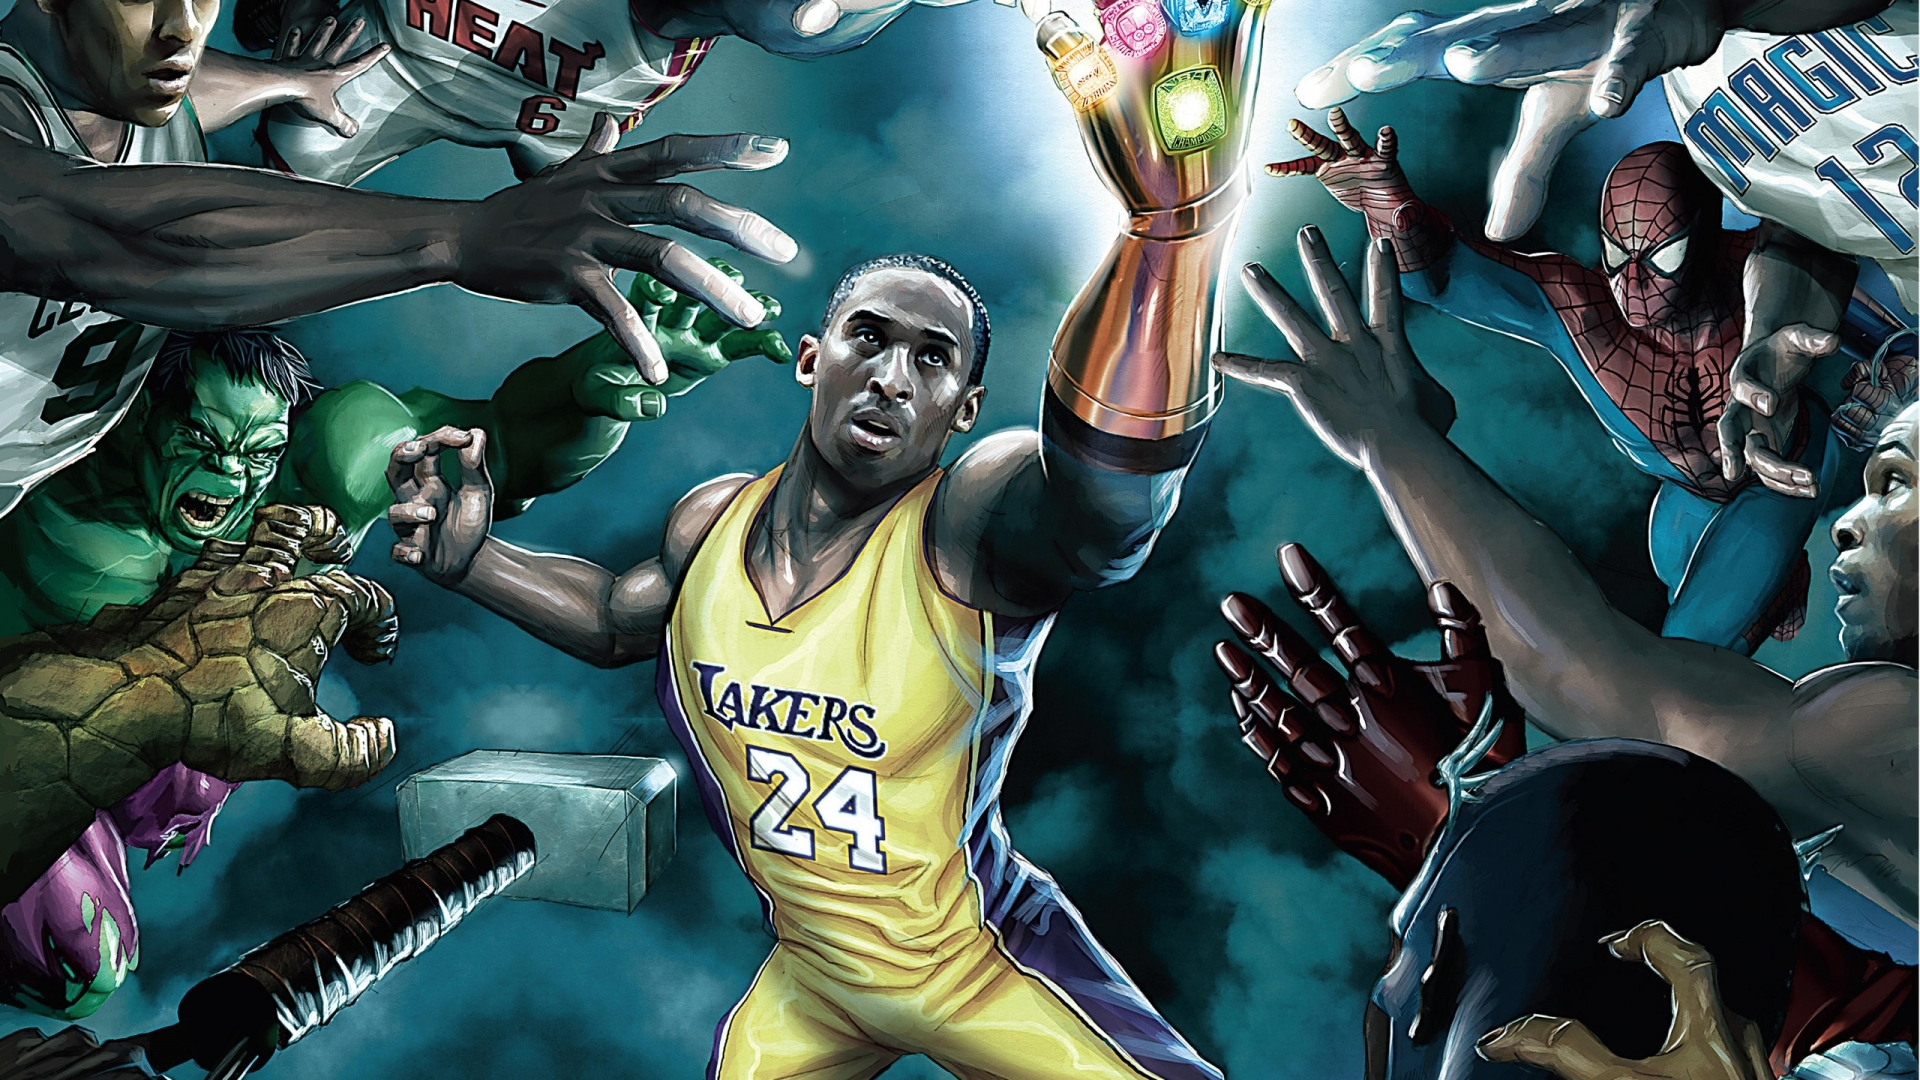 Download NBA players vs superheroes wallpaper